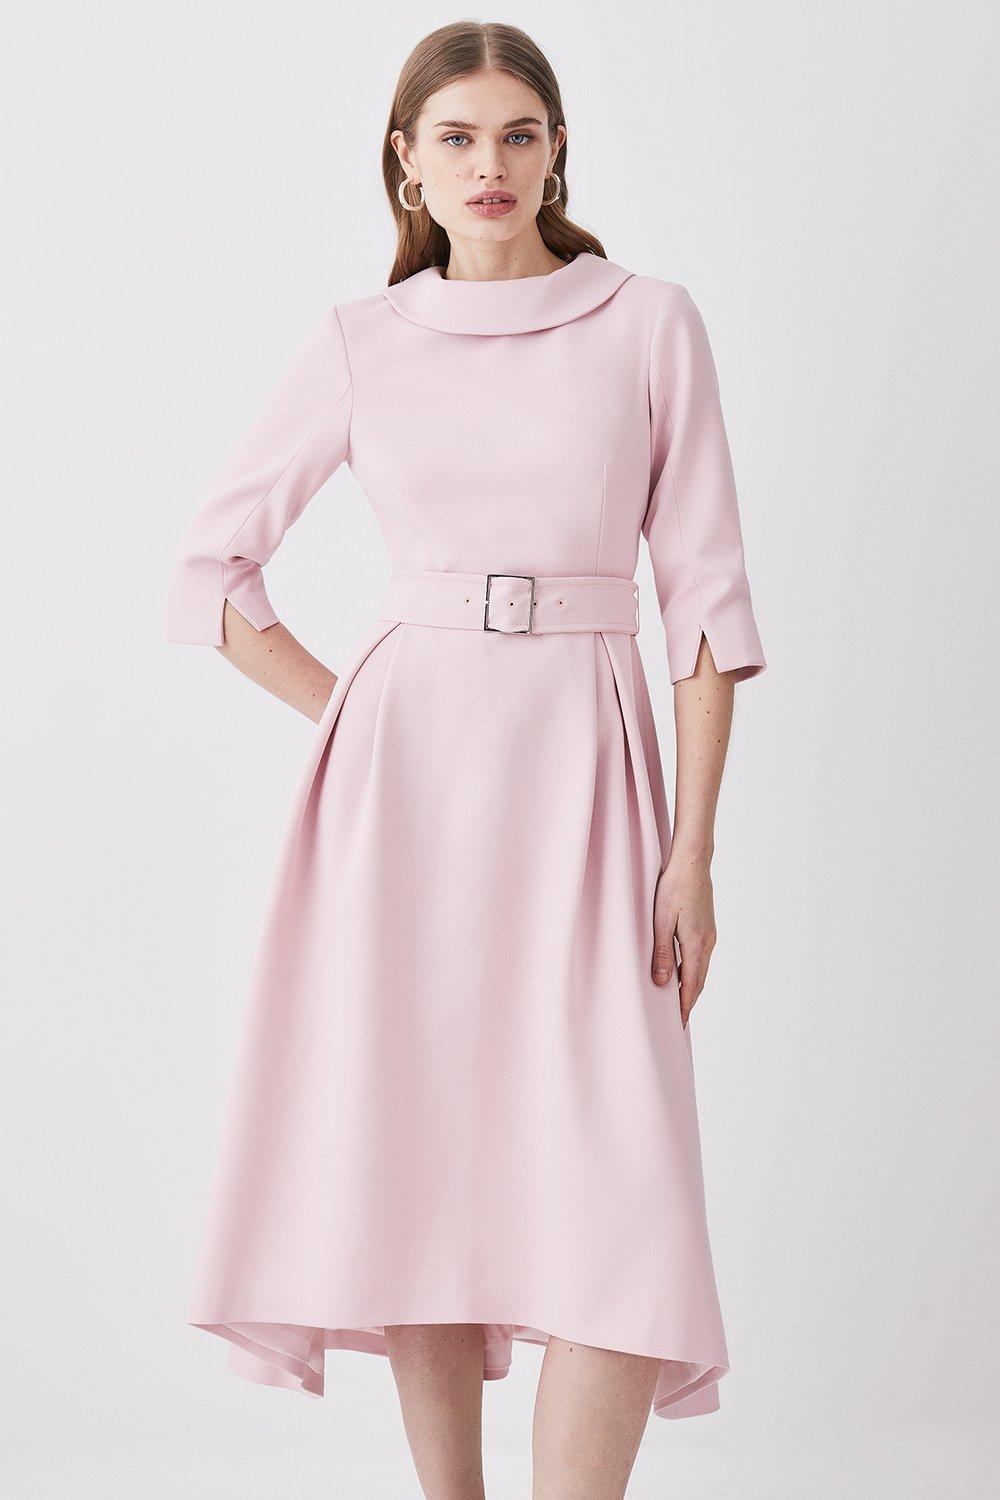 15+ Karen Millen Pink Dress